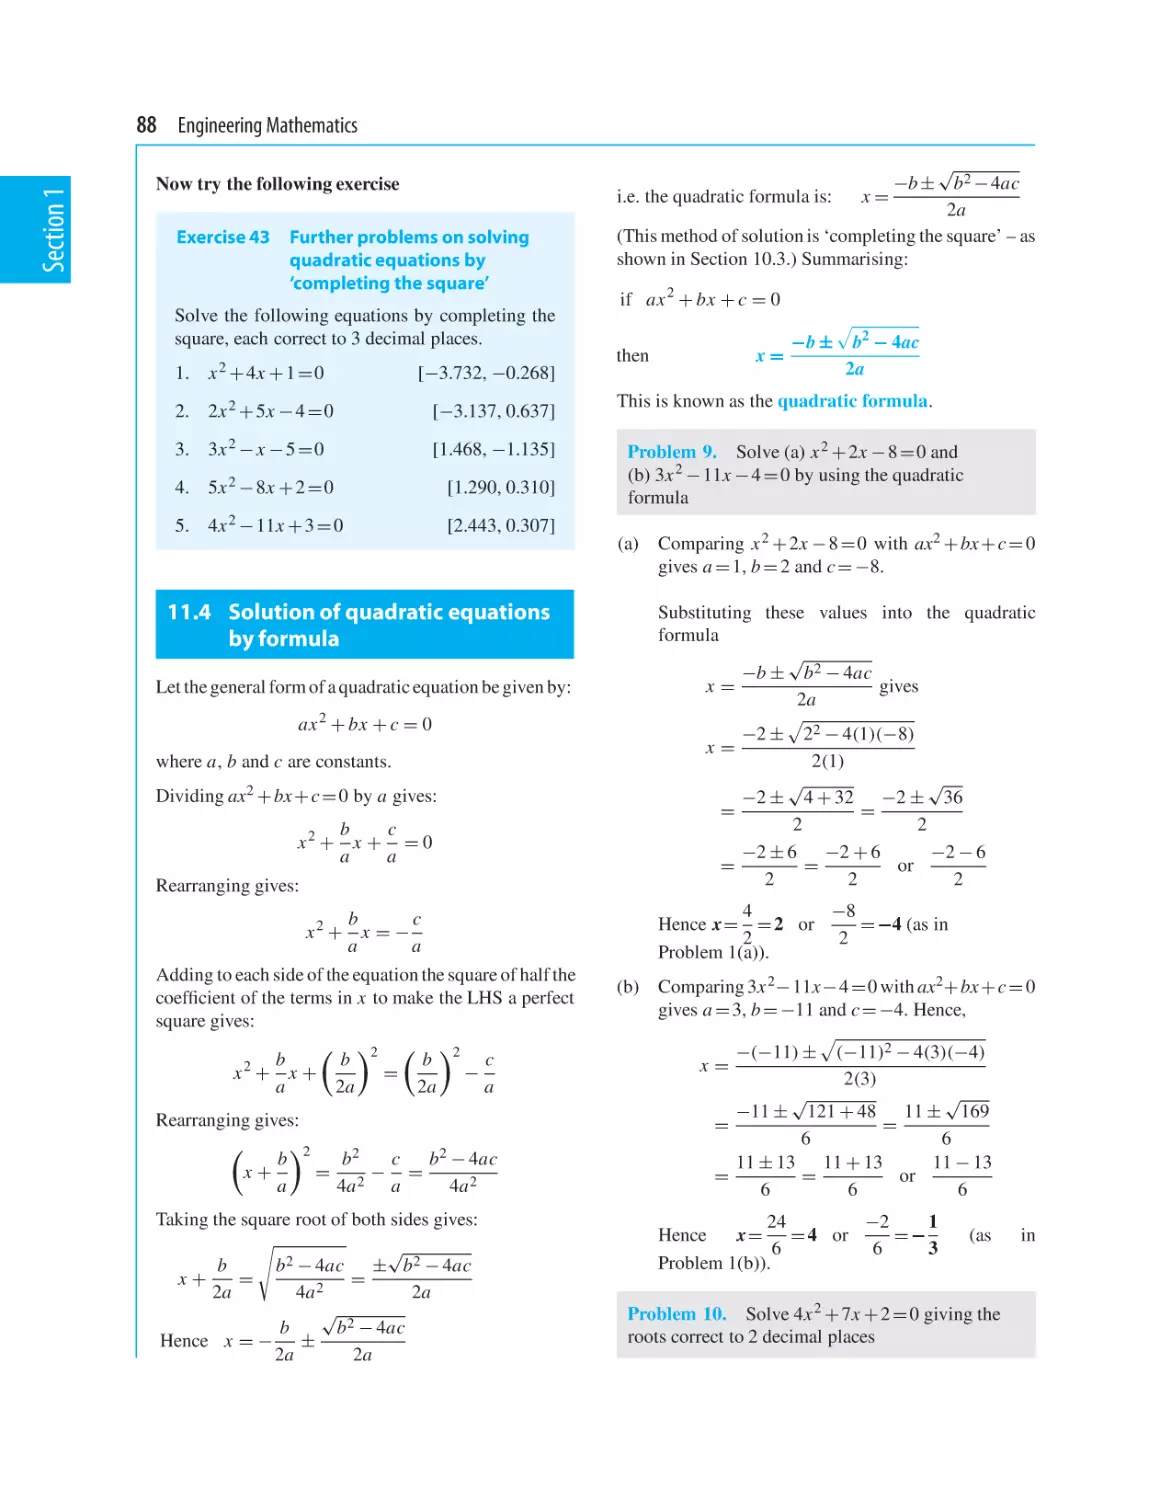 11.4 Solution of quadratic equations by formula